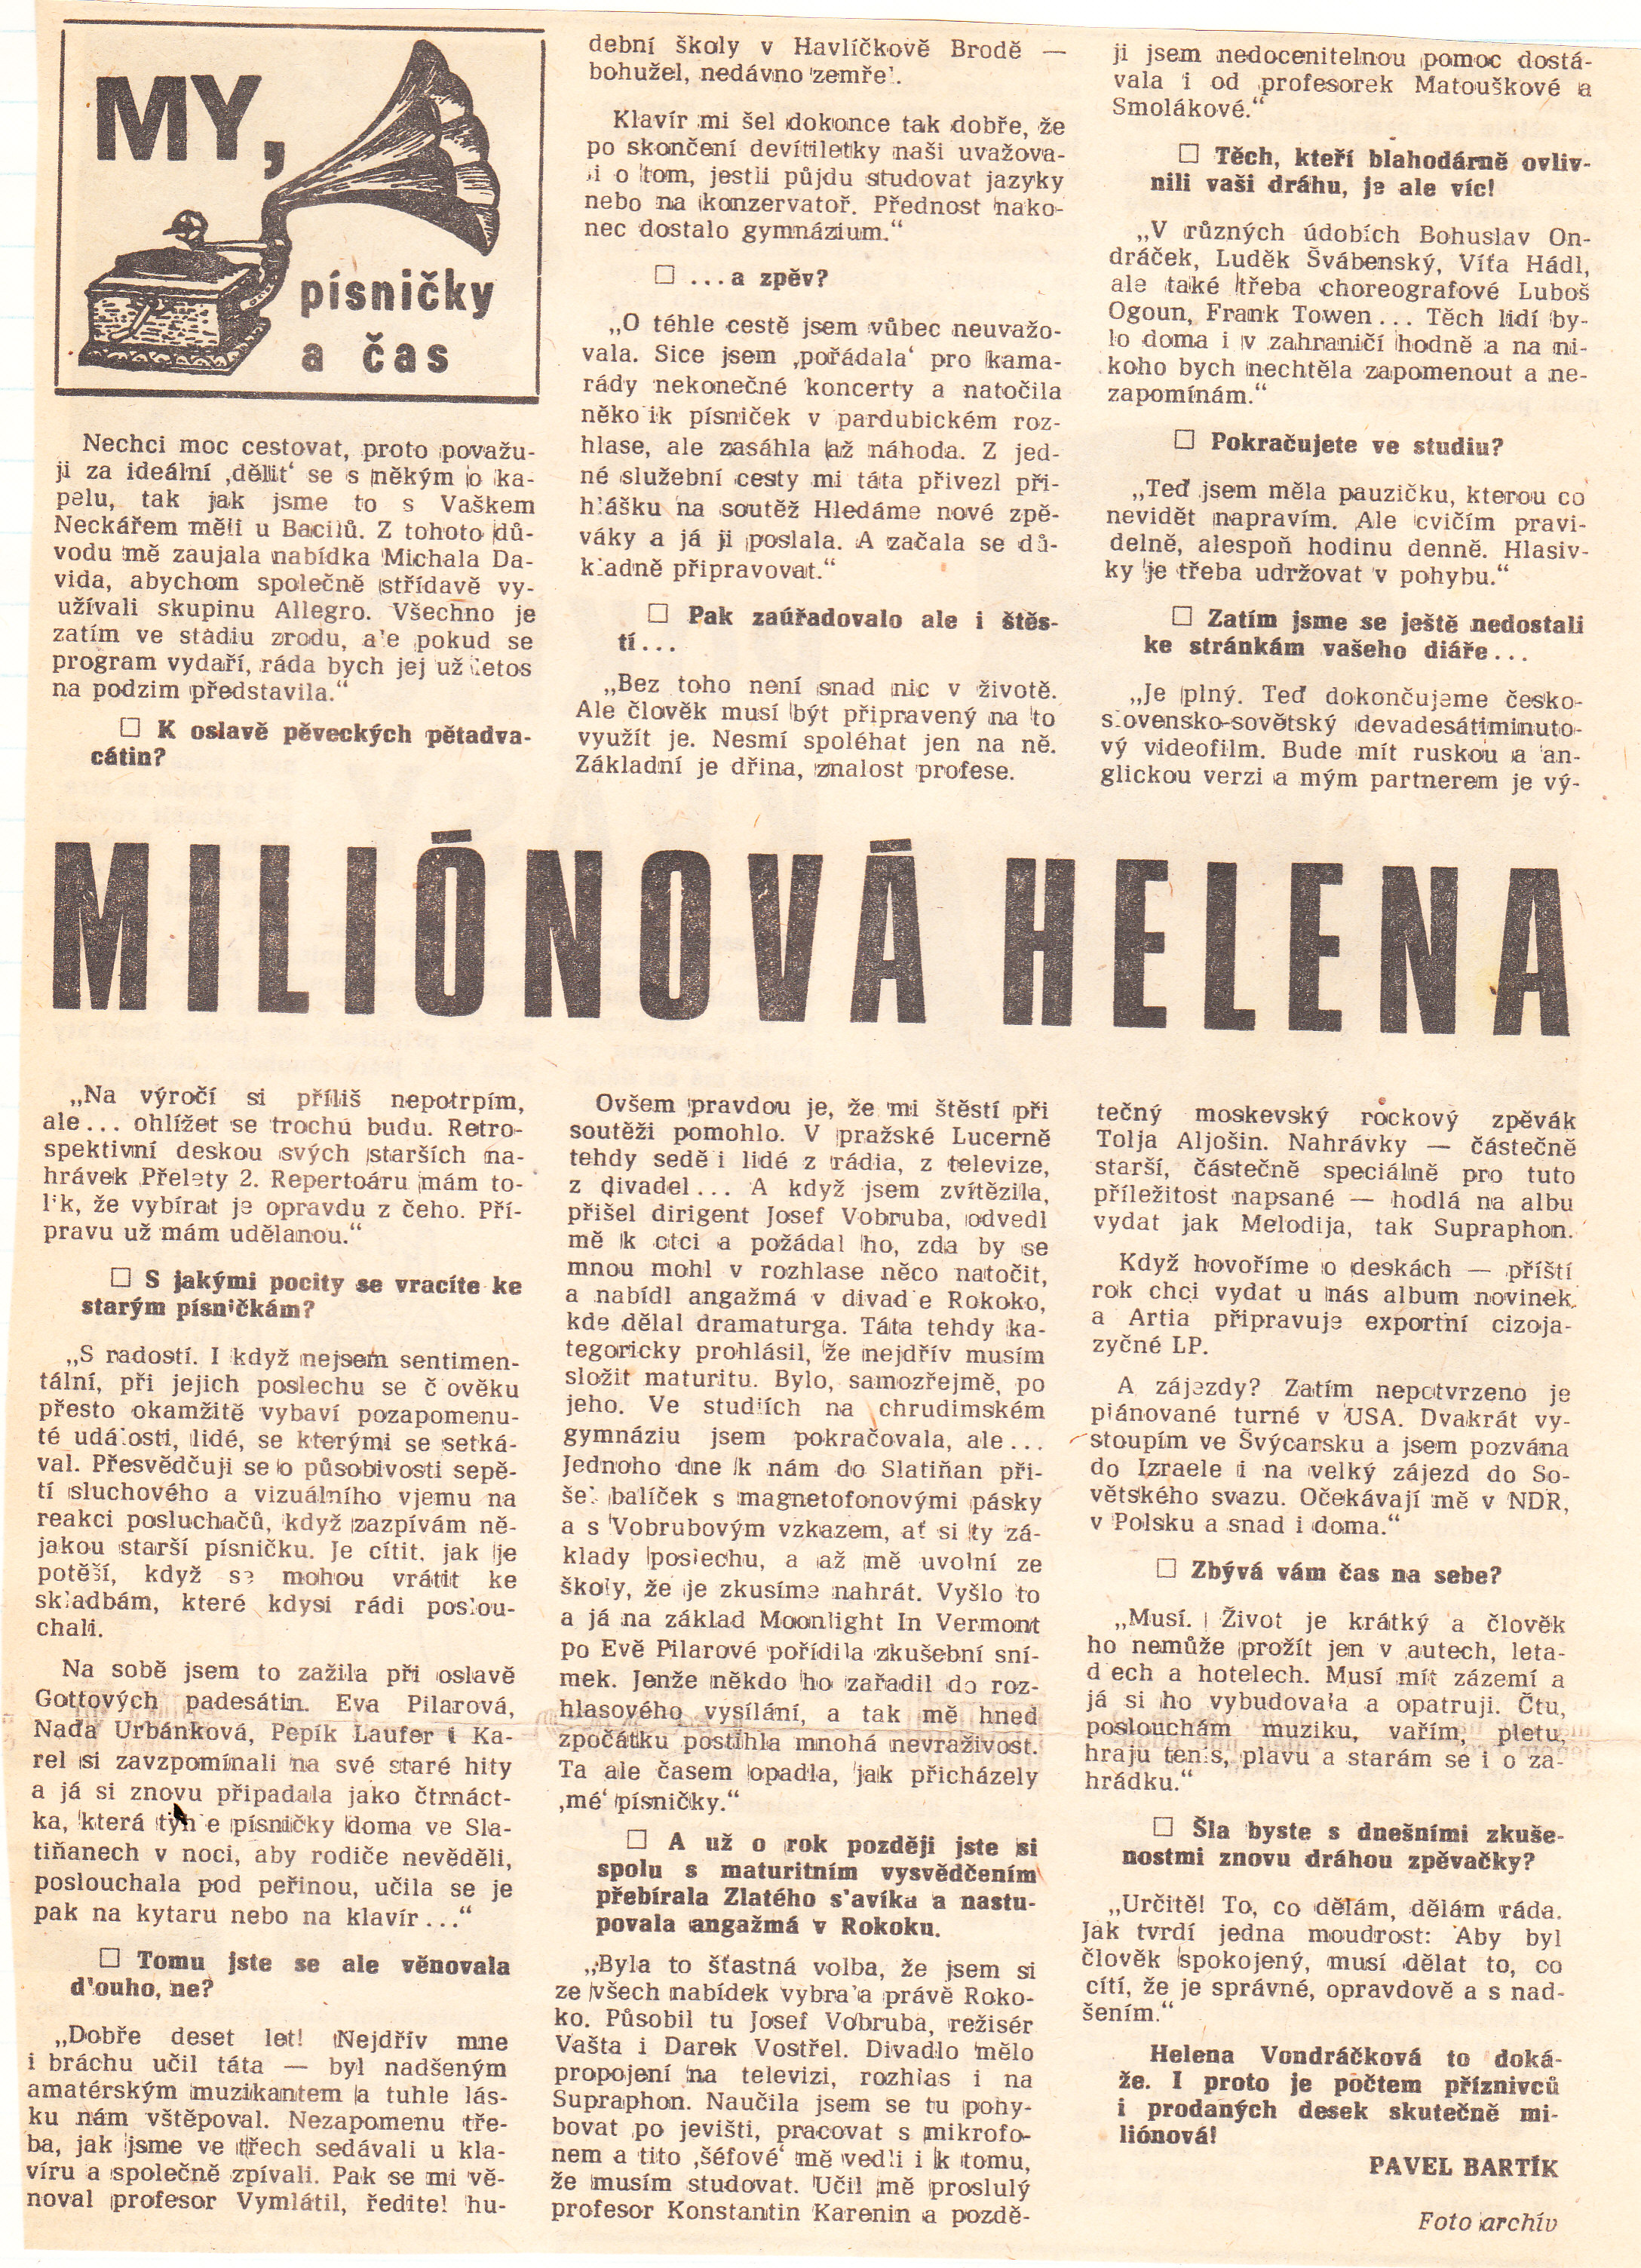 1989-8 Mladá fronta (3)